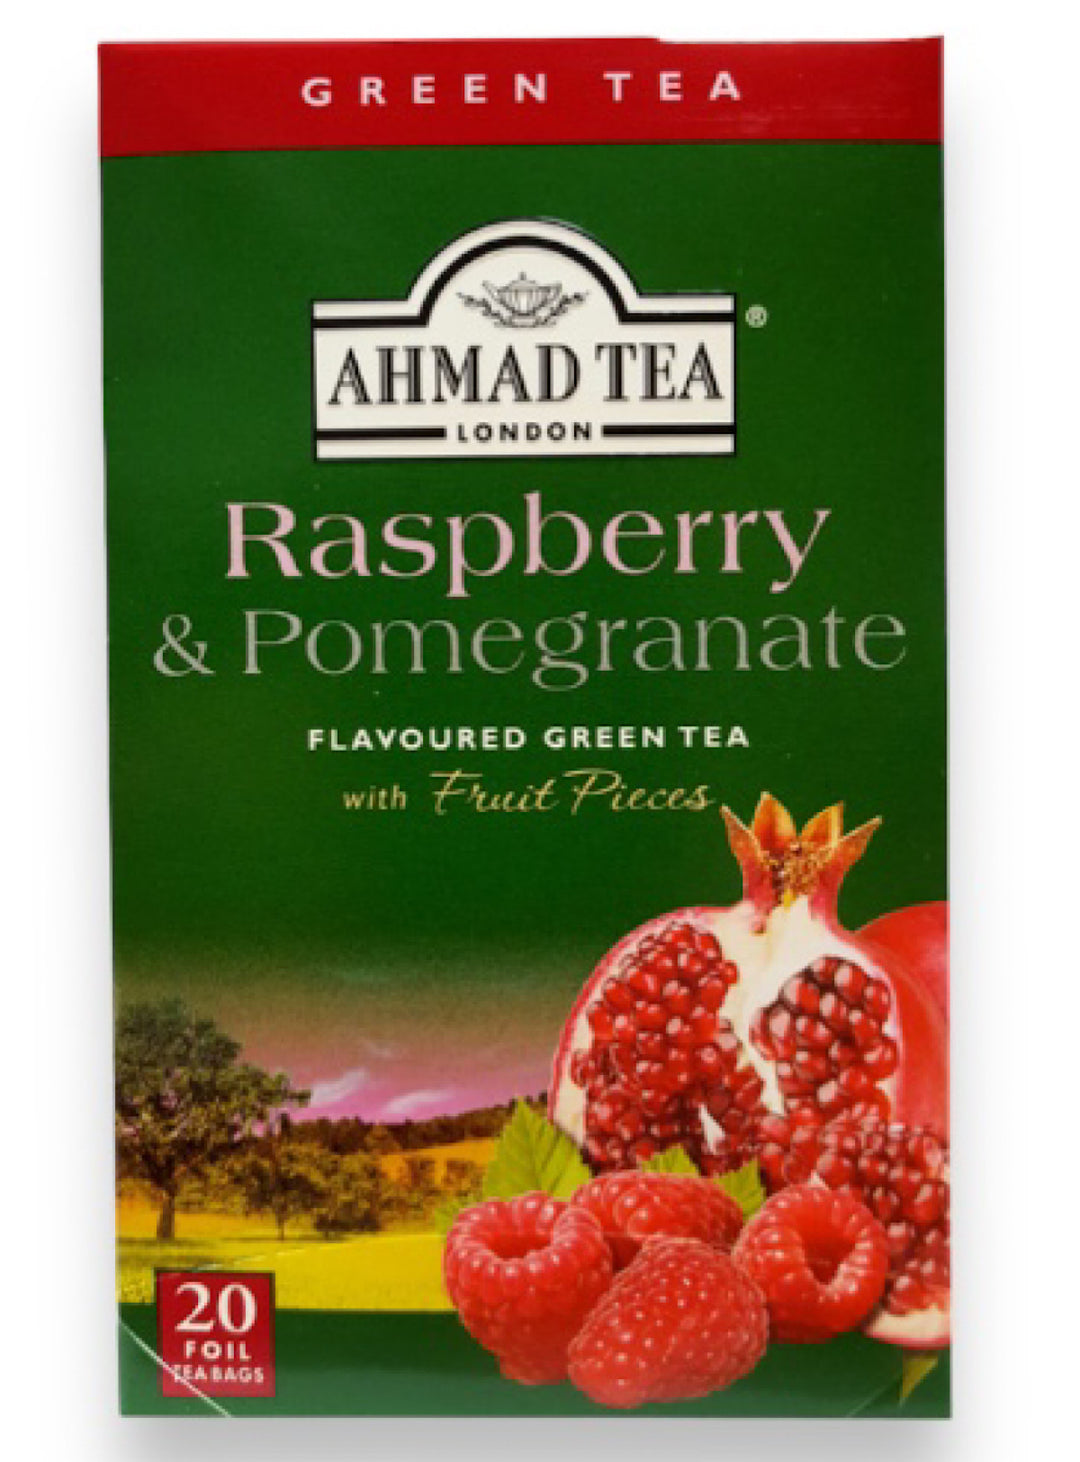 Raspberry and Pomegranate Grean Tea - Ahmad Tea - 20 Tea Bags